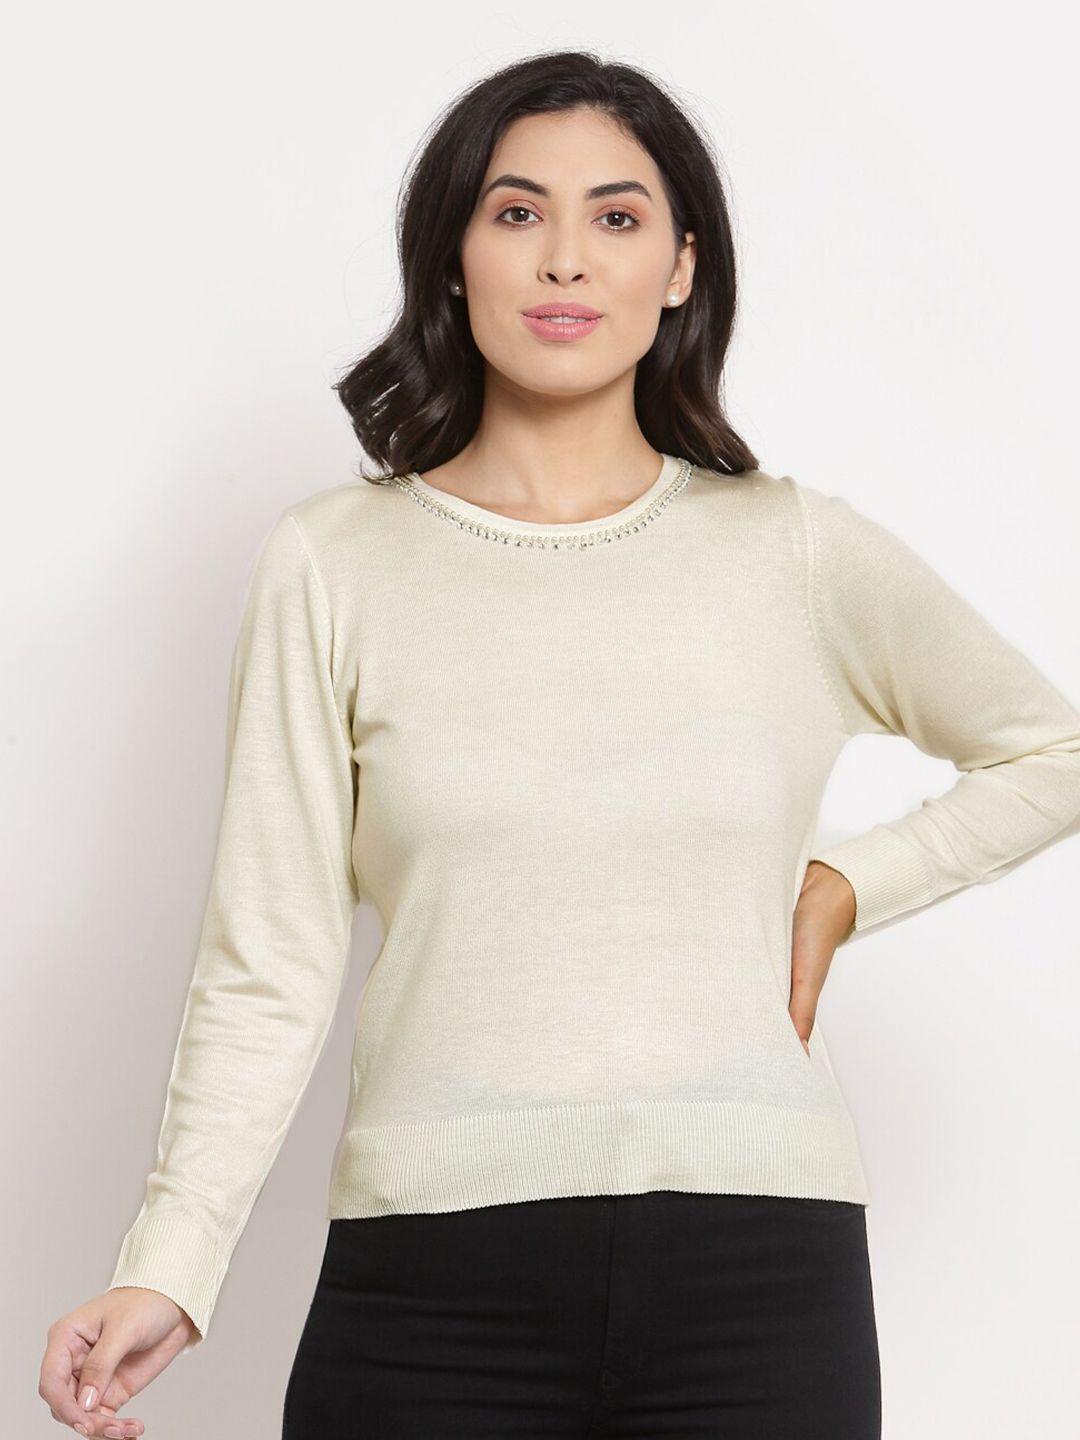 klotthe-women-cream-coloured-wool-pullover-sweater